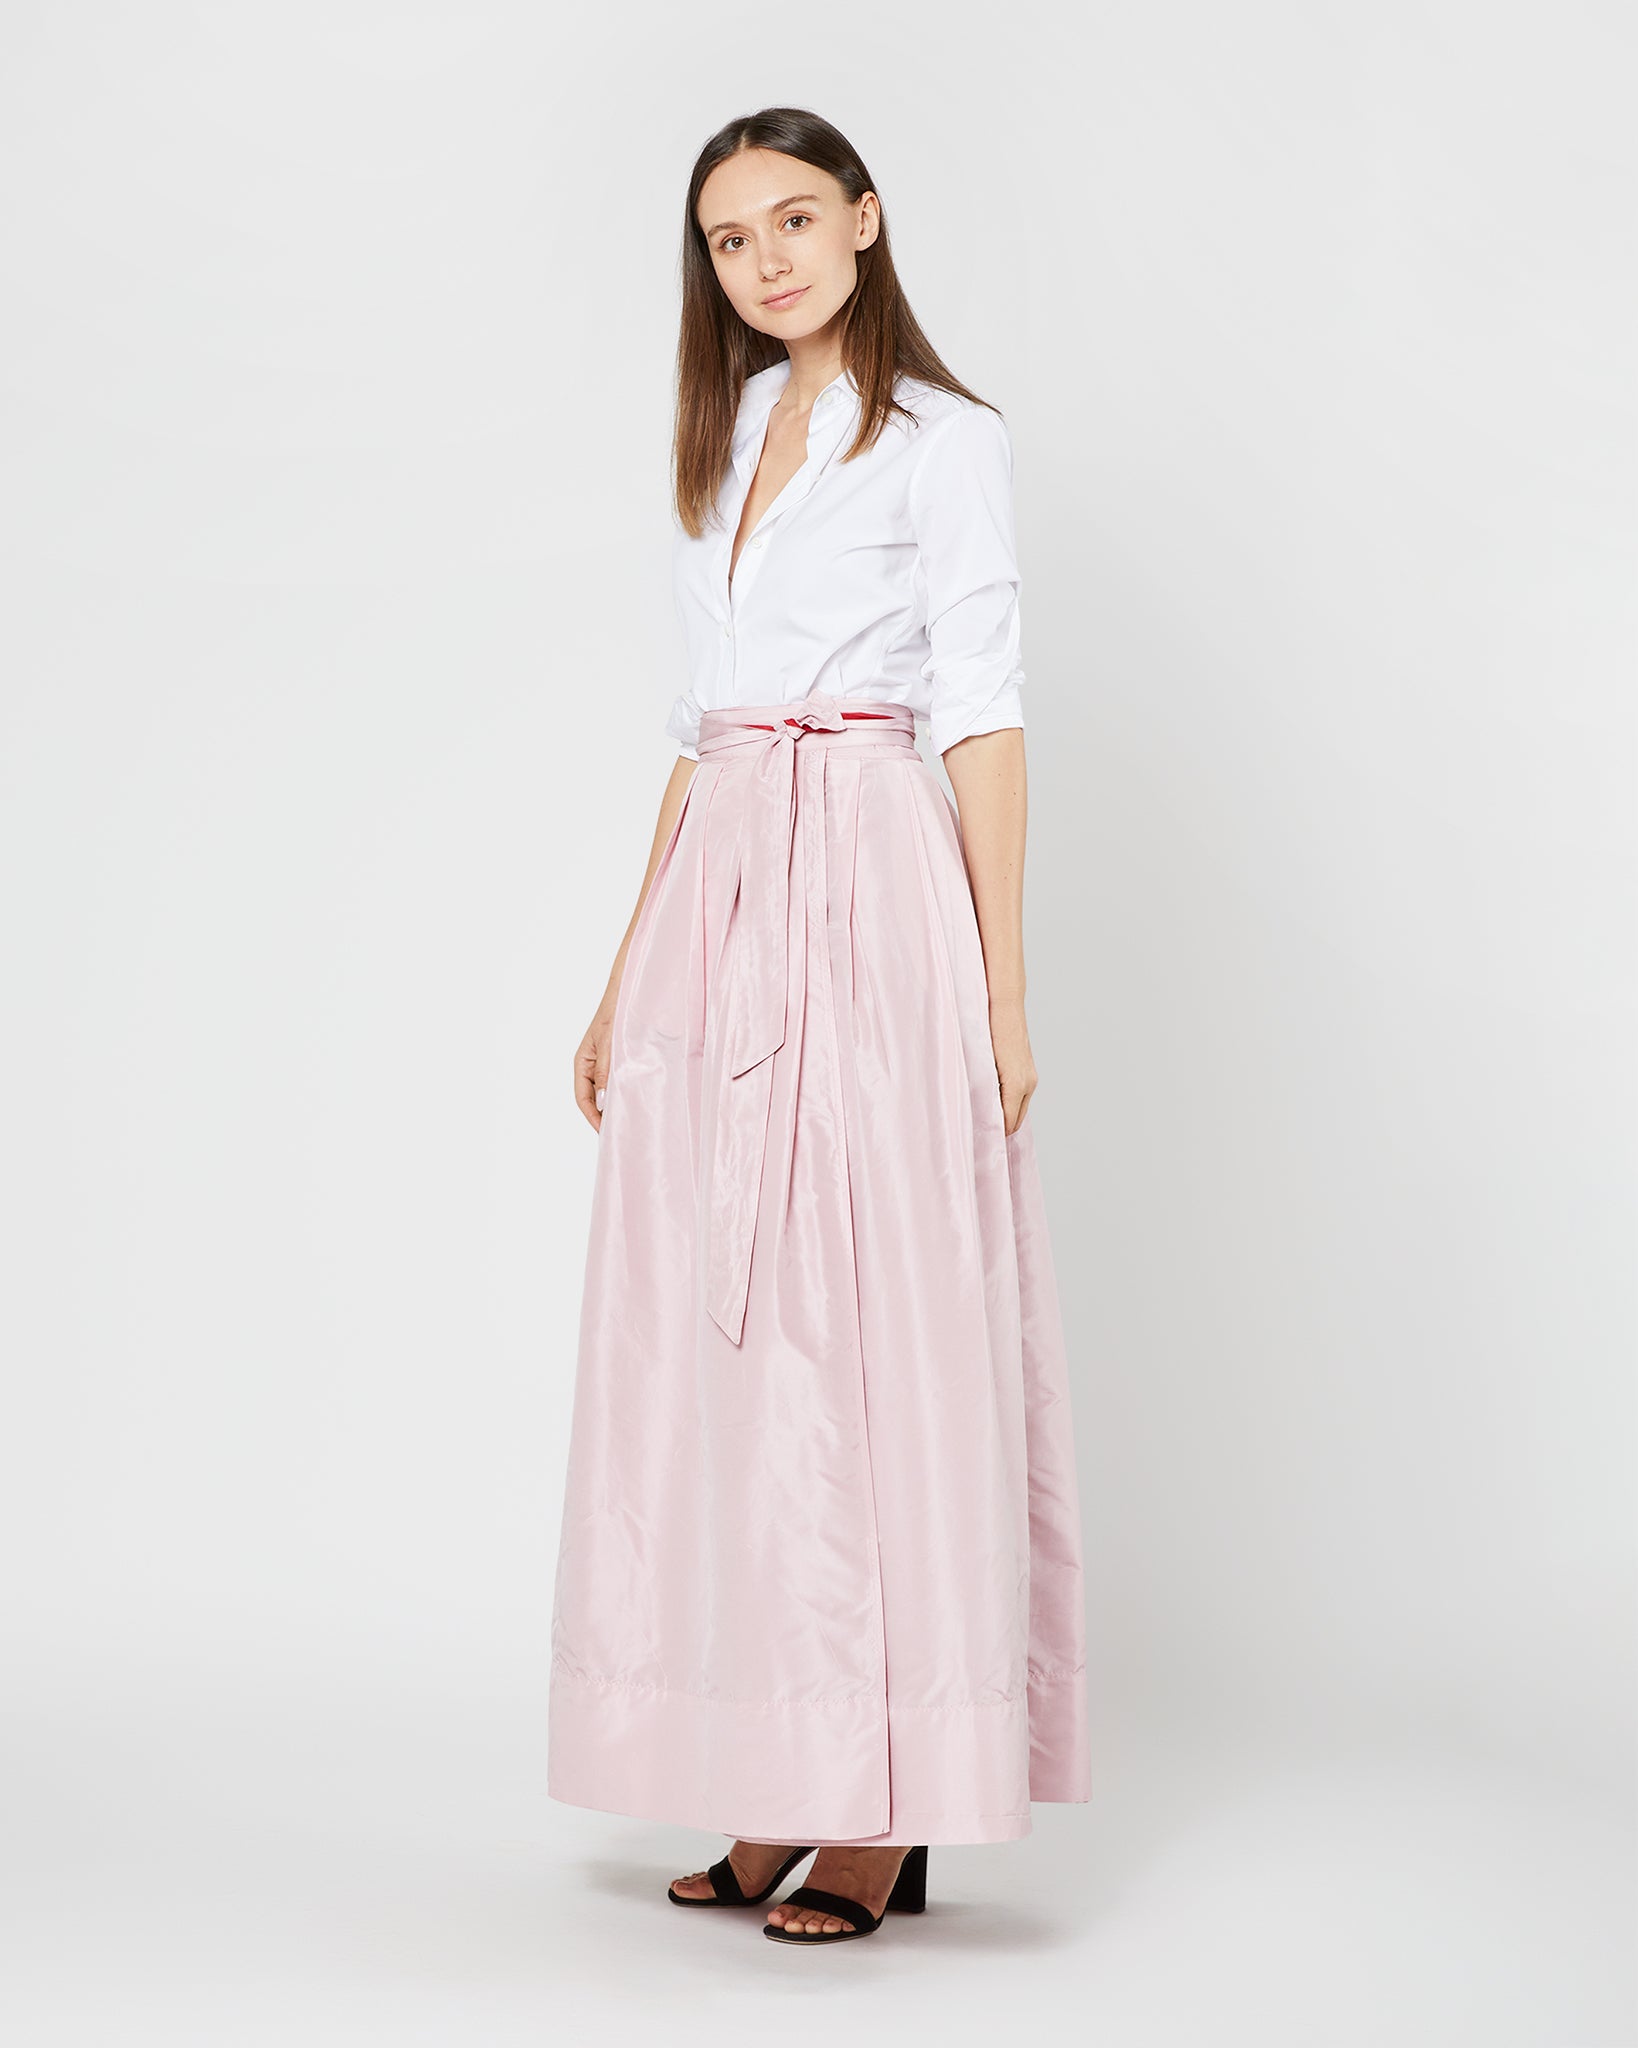 Reversible Pleated Wrap Skirt in Light Pink/Red Silk Taffeta 